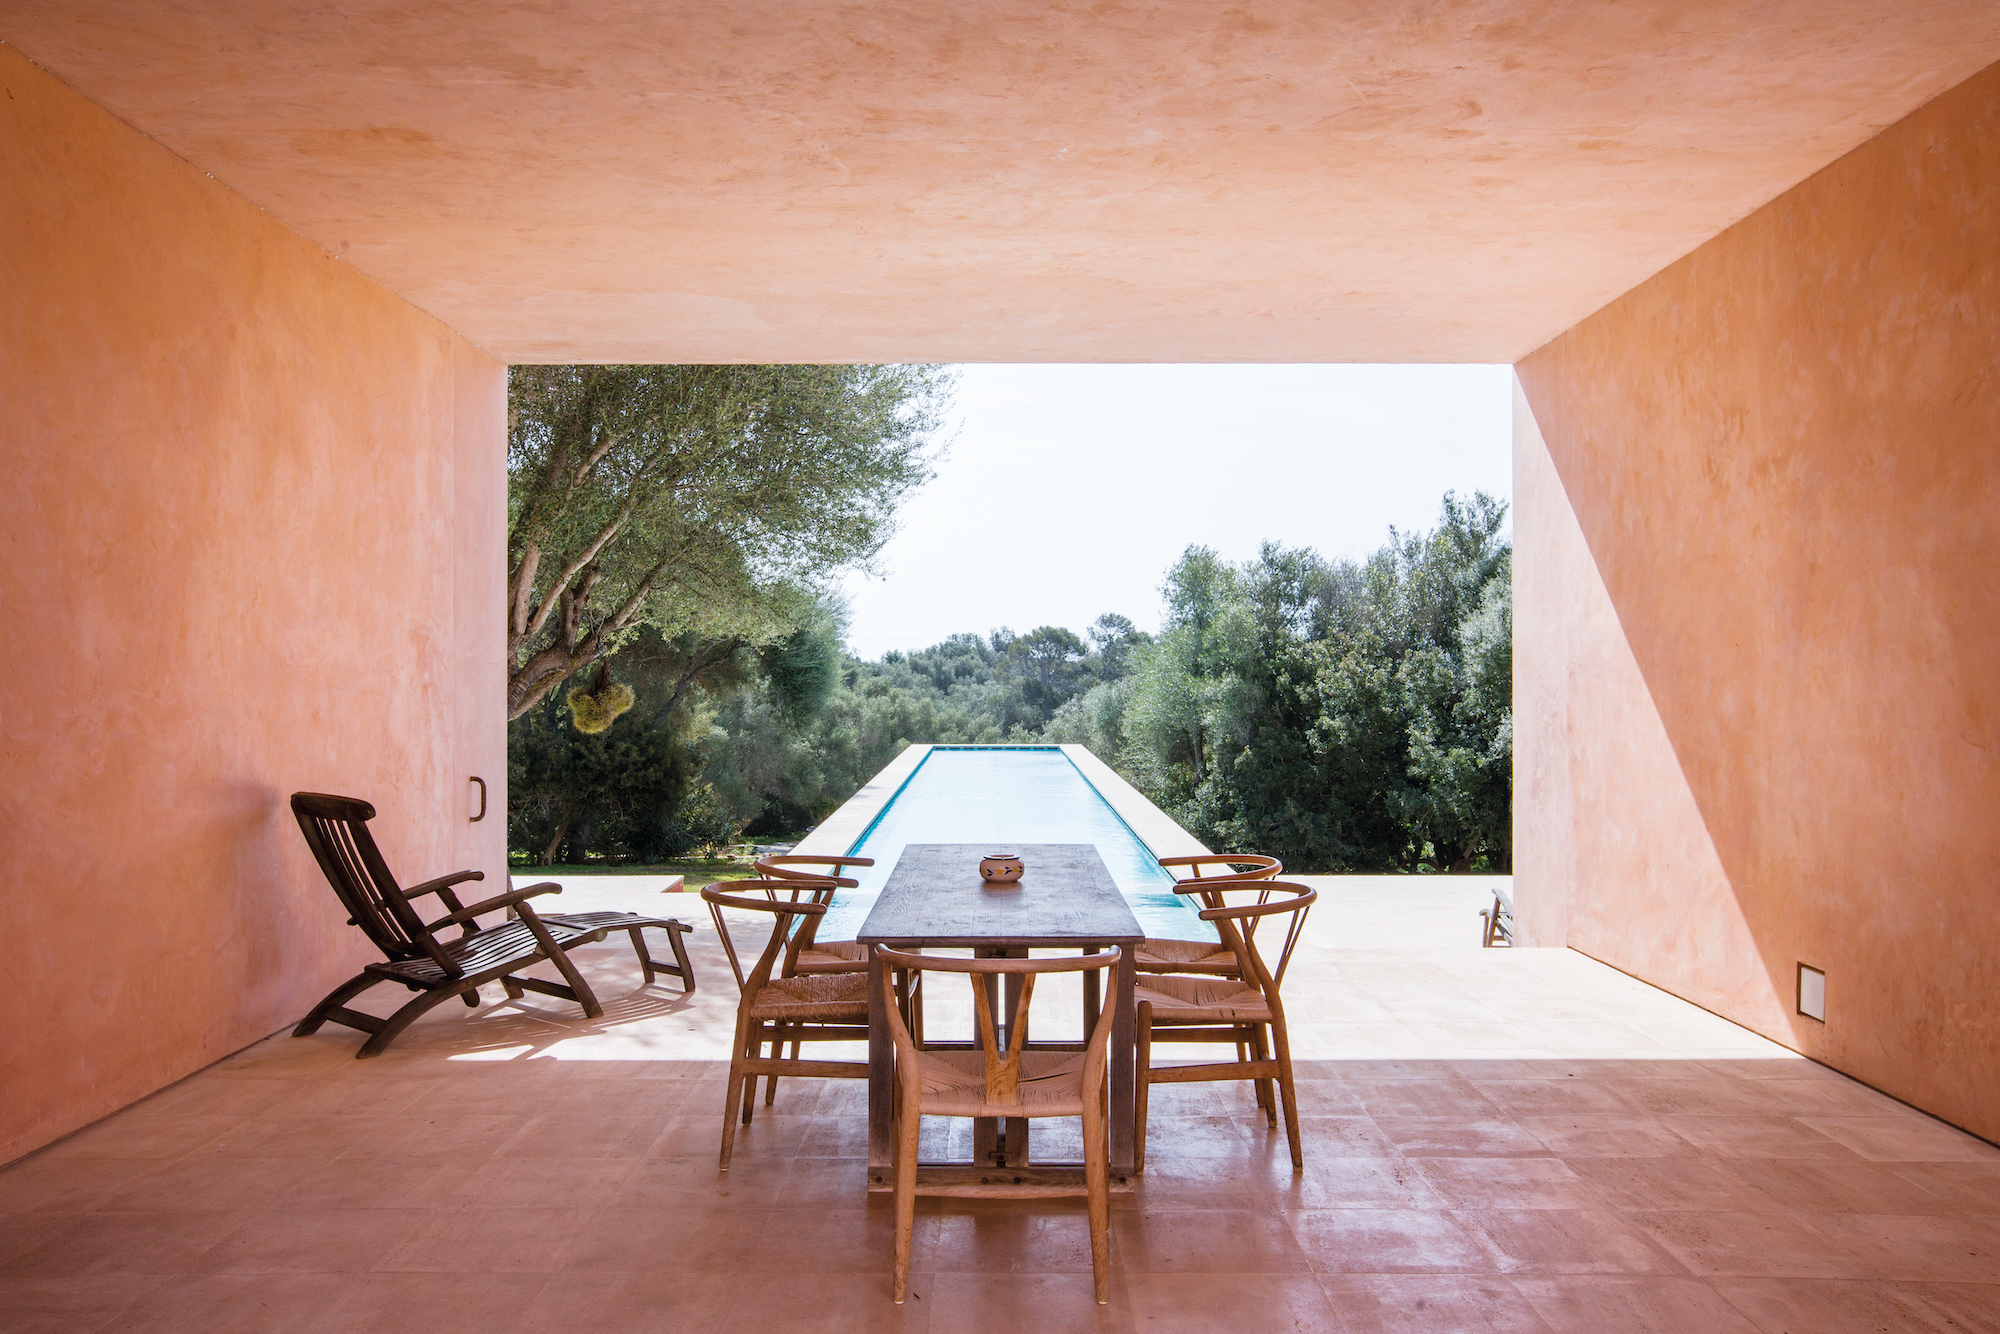 Els Comellars in Mallorca was created by British architect John Pawson and Italian minimalism Claudio Silvestrin - Effect Magazine